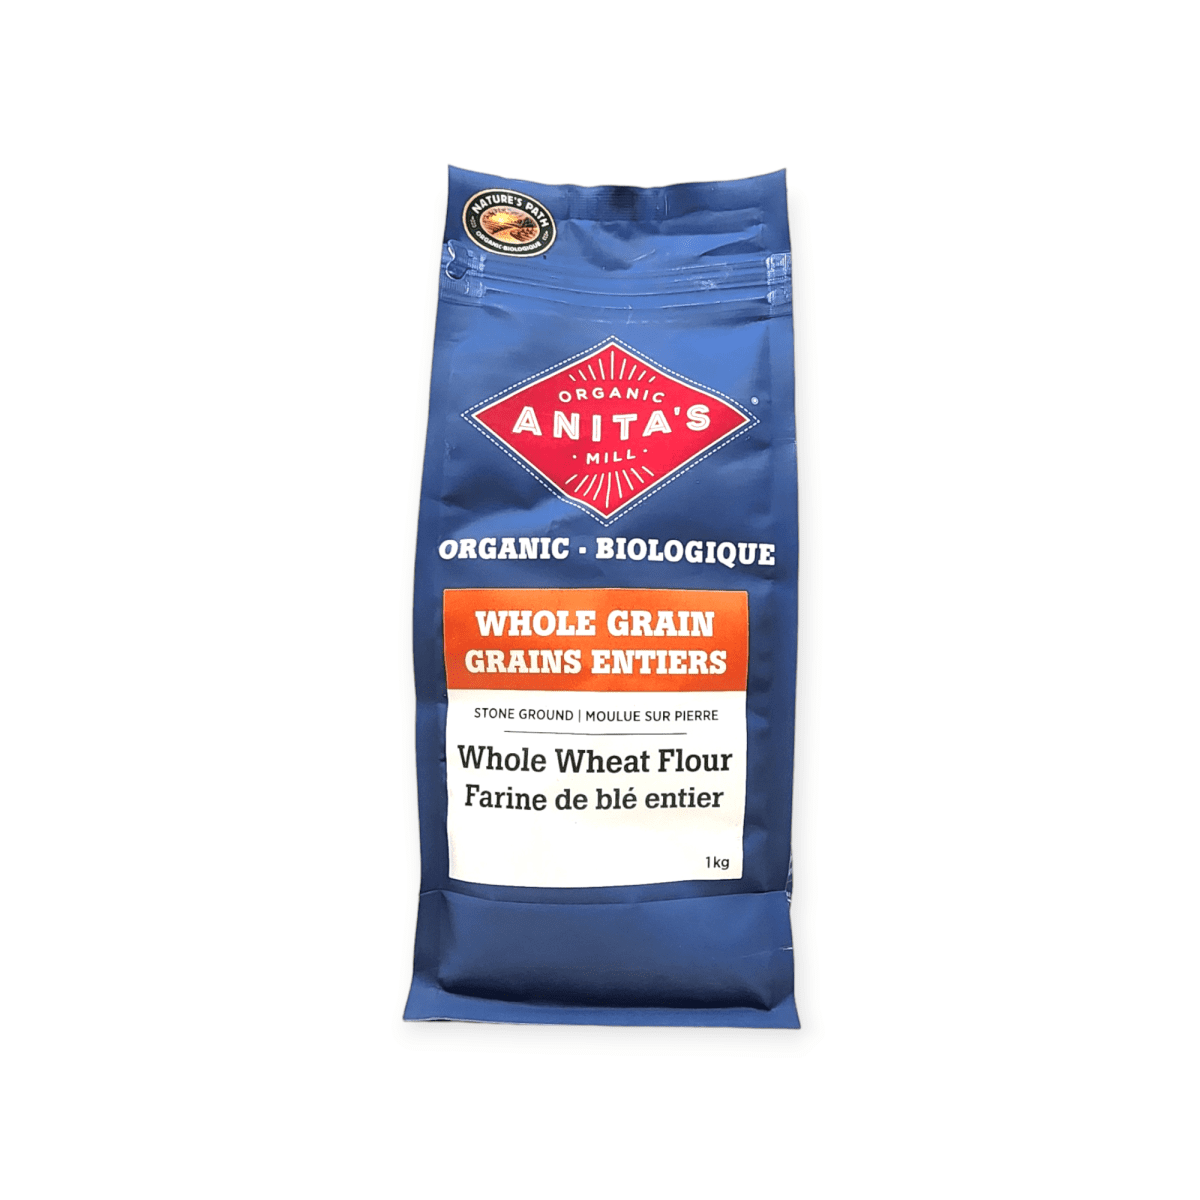 Nature’s Path Anita’s Whole Grain Whole Wheat Flour (1kg)